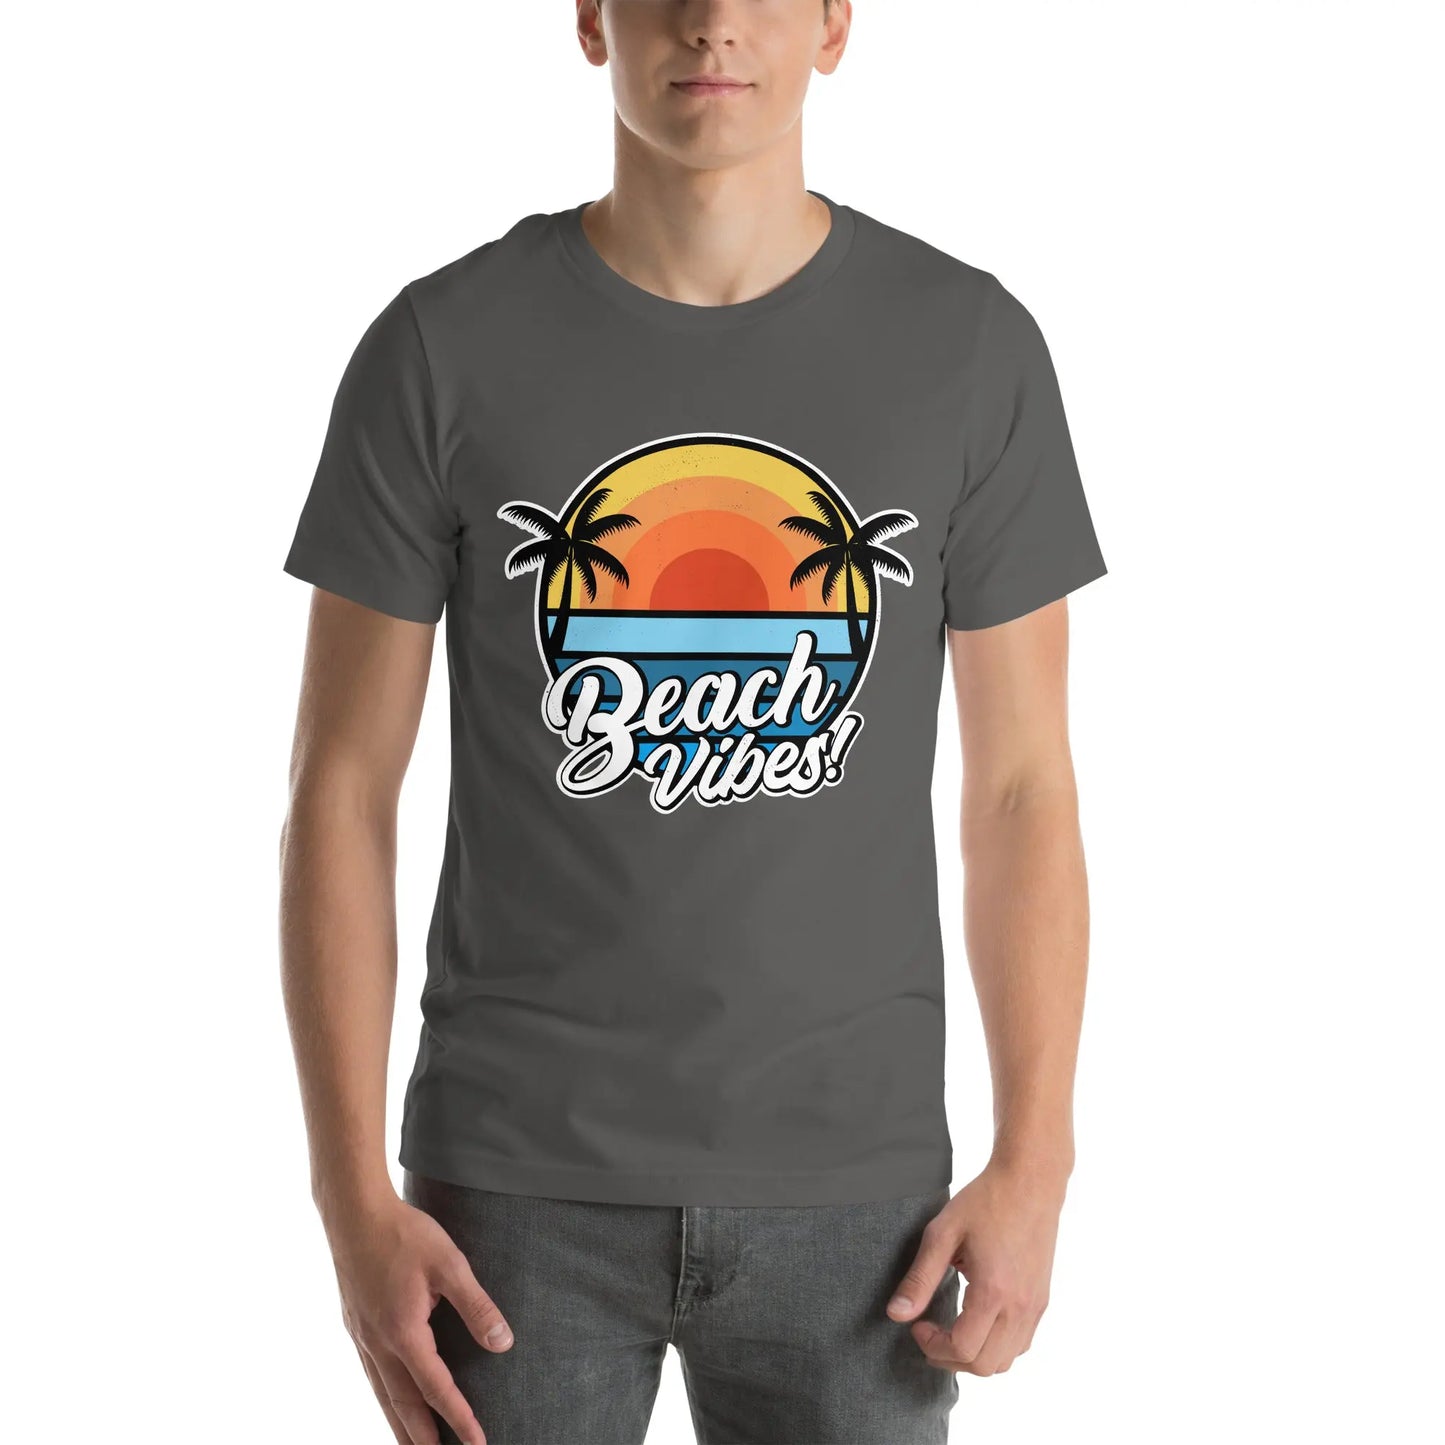 Beach Vibes with this Coastal Adult Unisex T-Shirt - Coastal Journeyz9496443_4031